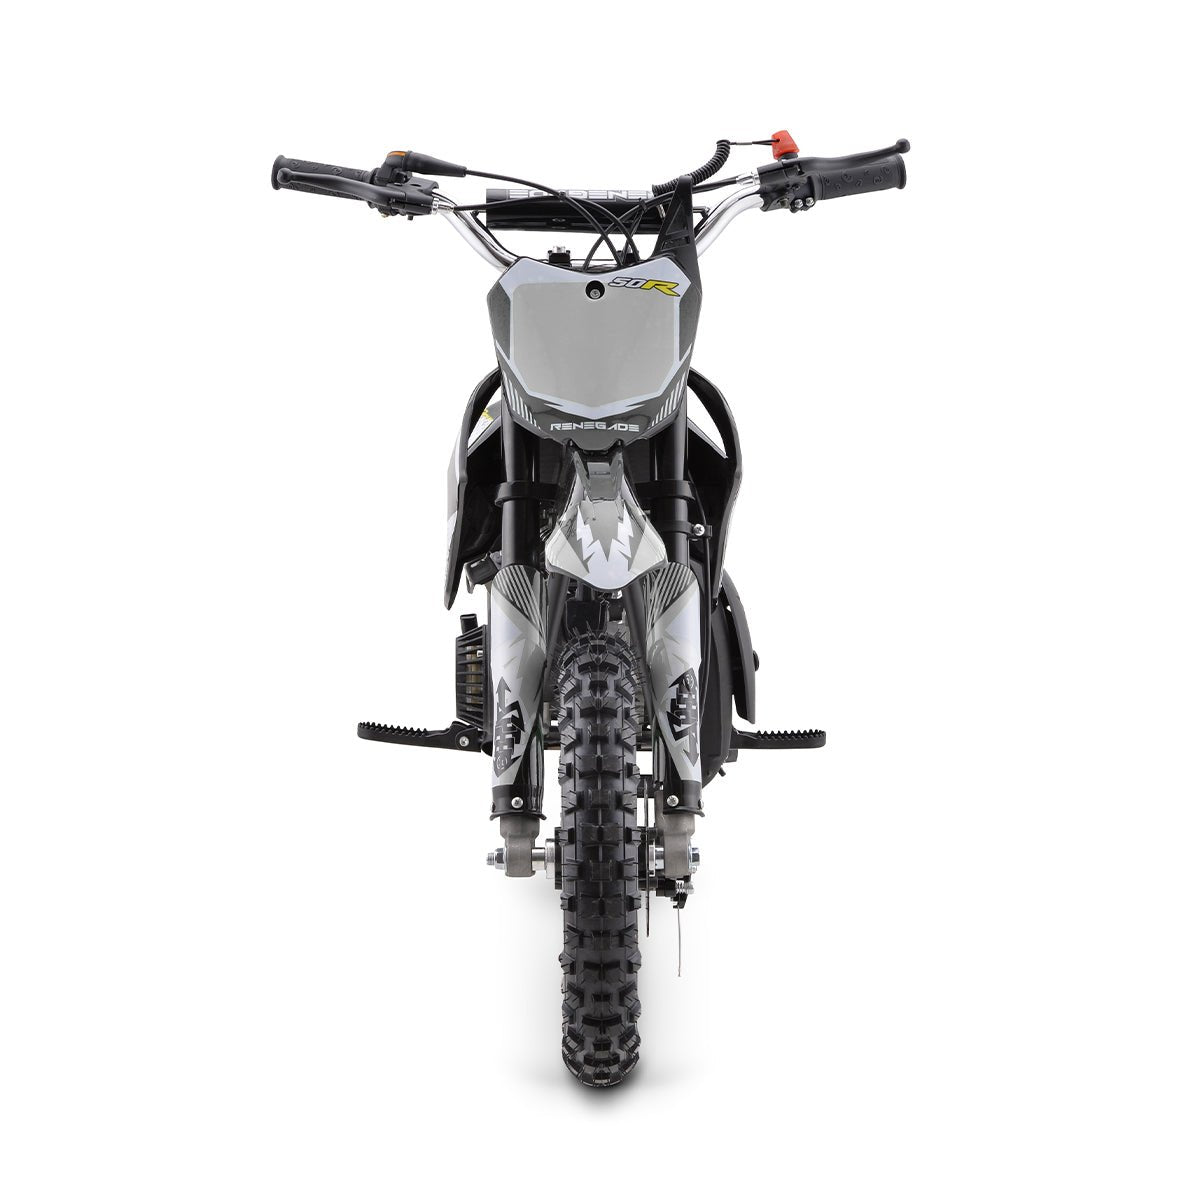 Renegade 50R 49cc Petrol Mini Dirt Bike - White